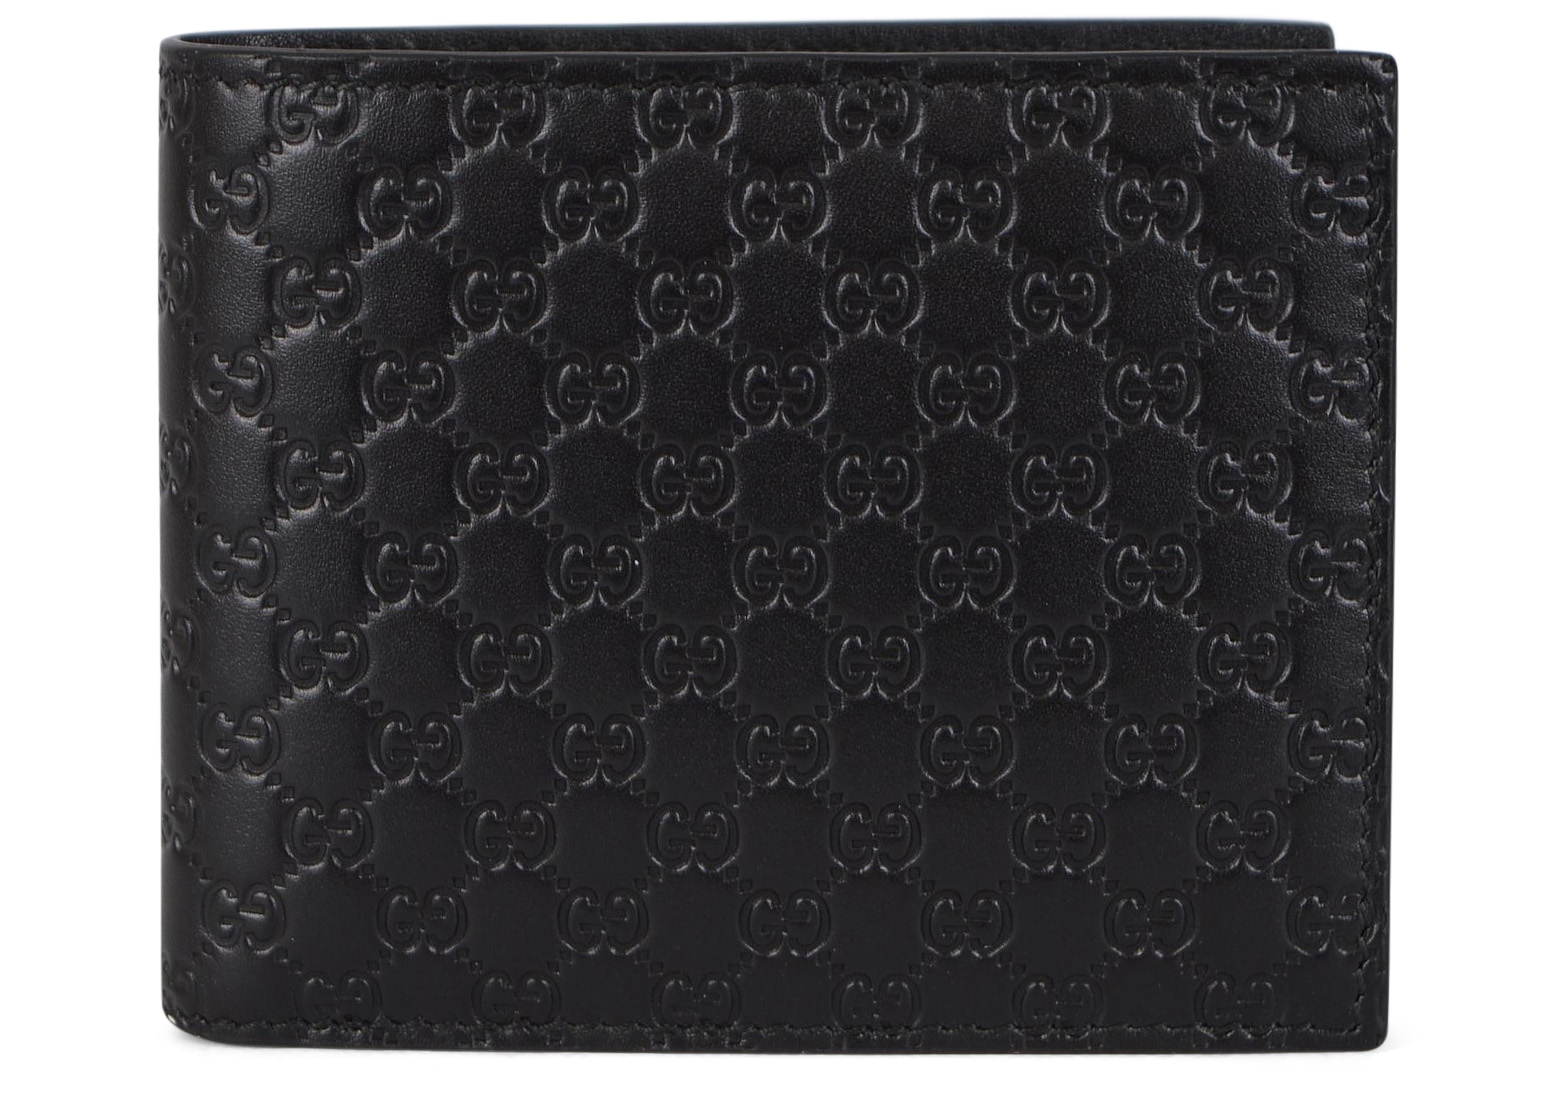 all black gucci wallet